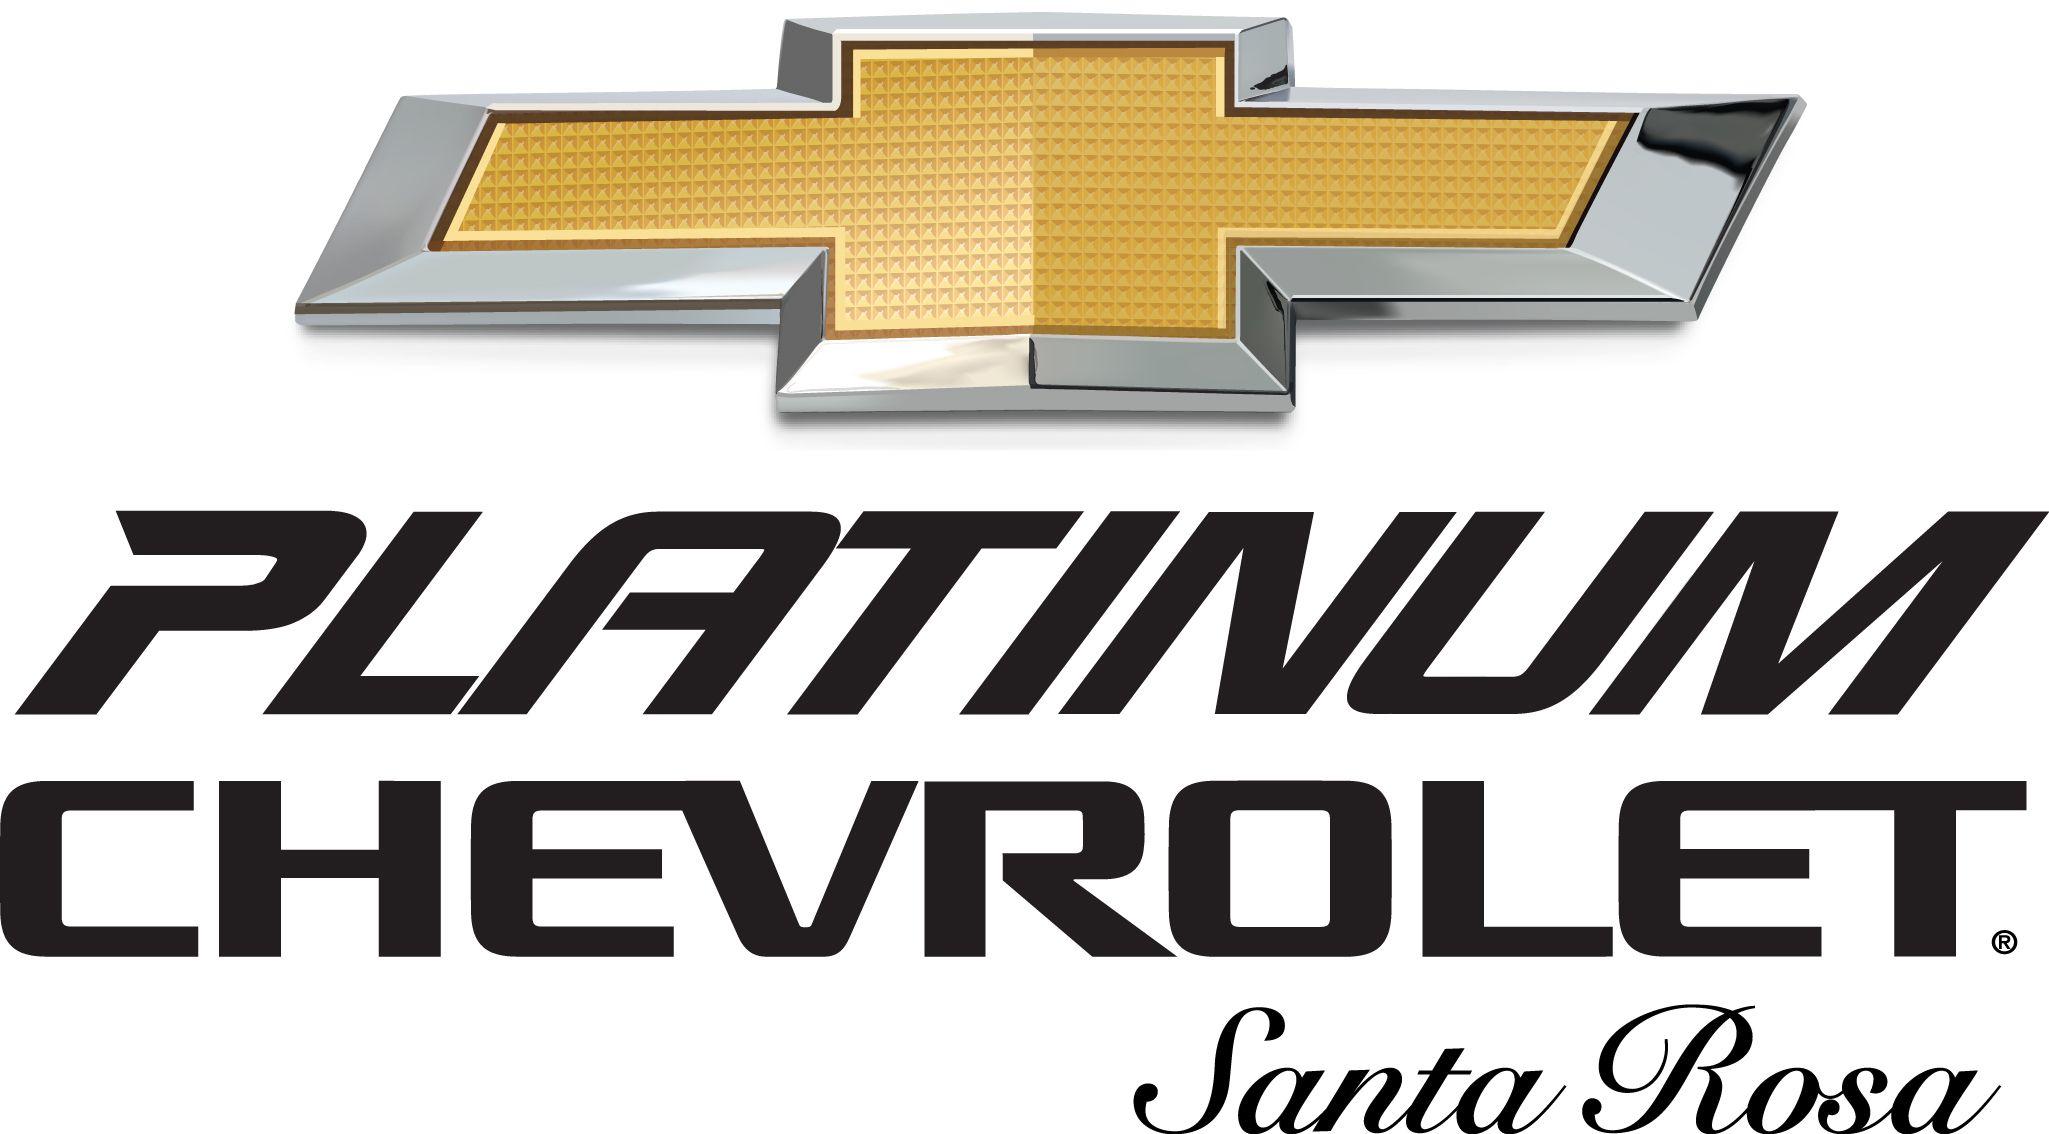 Chevrolet Malibu Logo - New 2018 Chevrolet Malibu from your Santa Rosa CA dealership